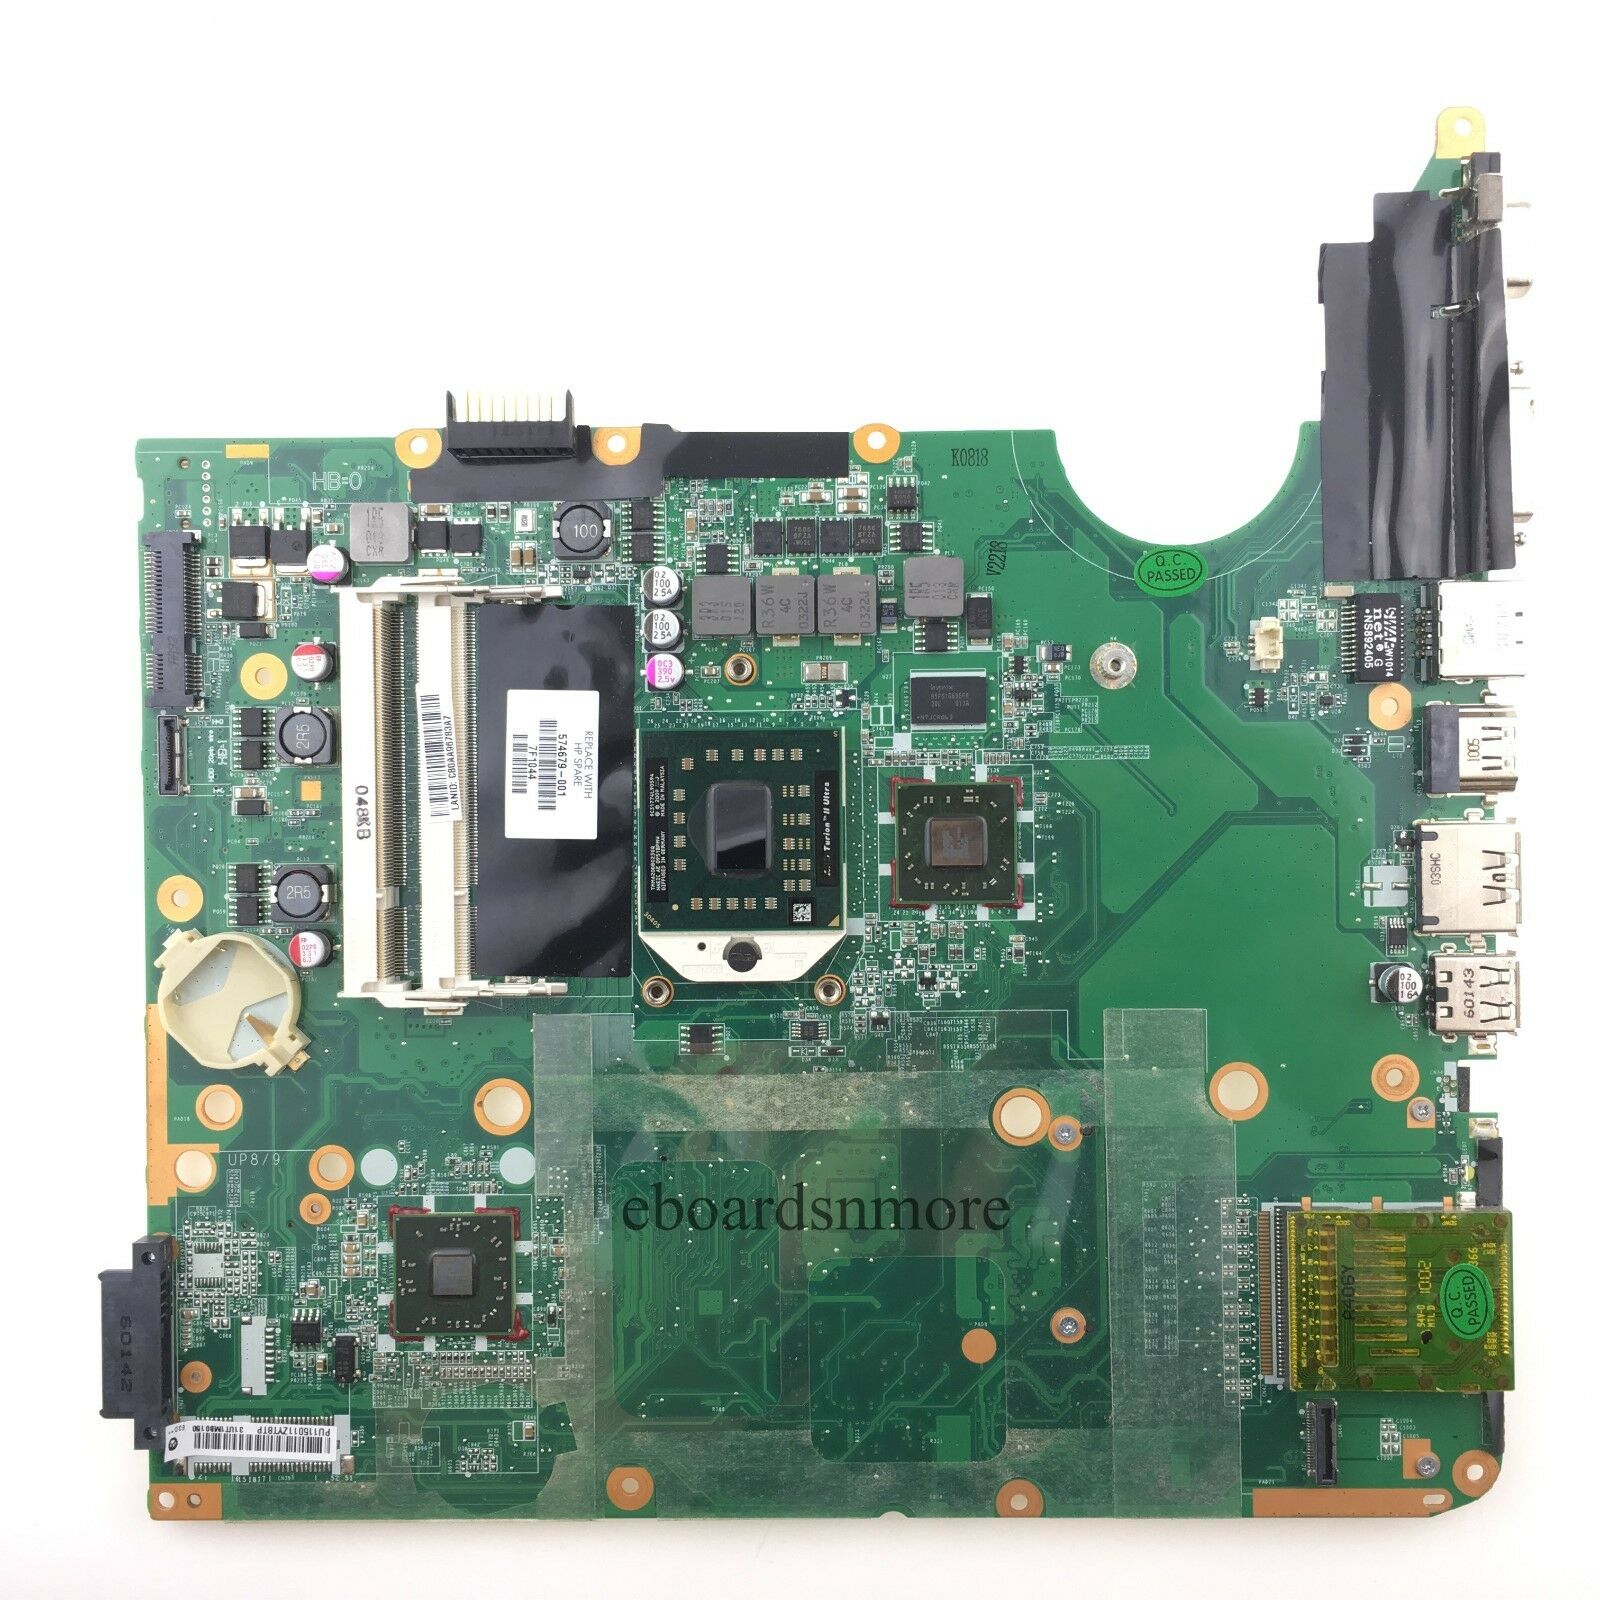 574679-001 AMD MOTHERBOARD for HP PAVILION DV7-3000 Series ATI Radeon HD4250 EXC Brand: HP Bundle Listing: